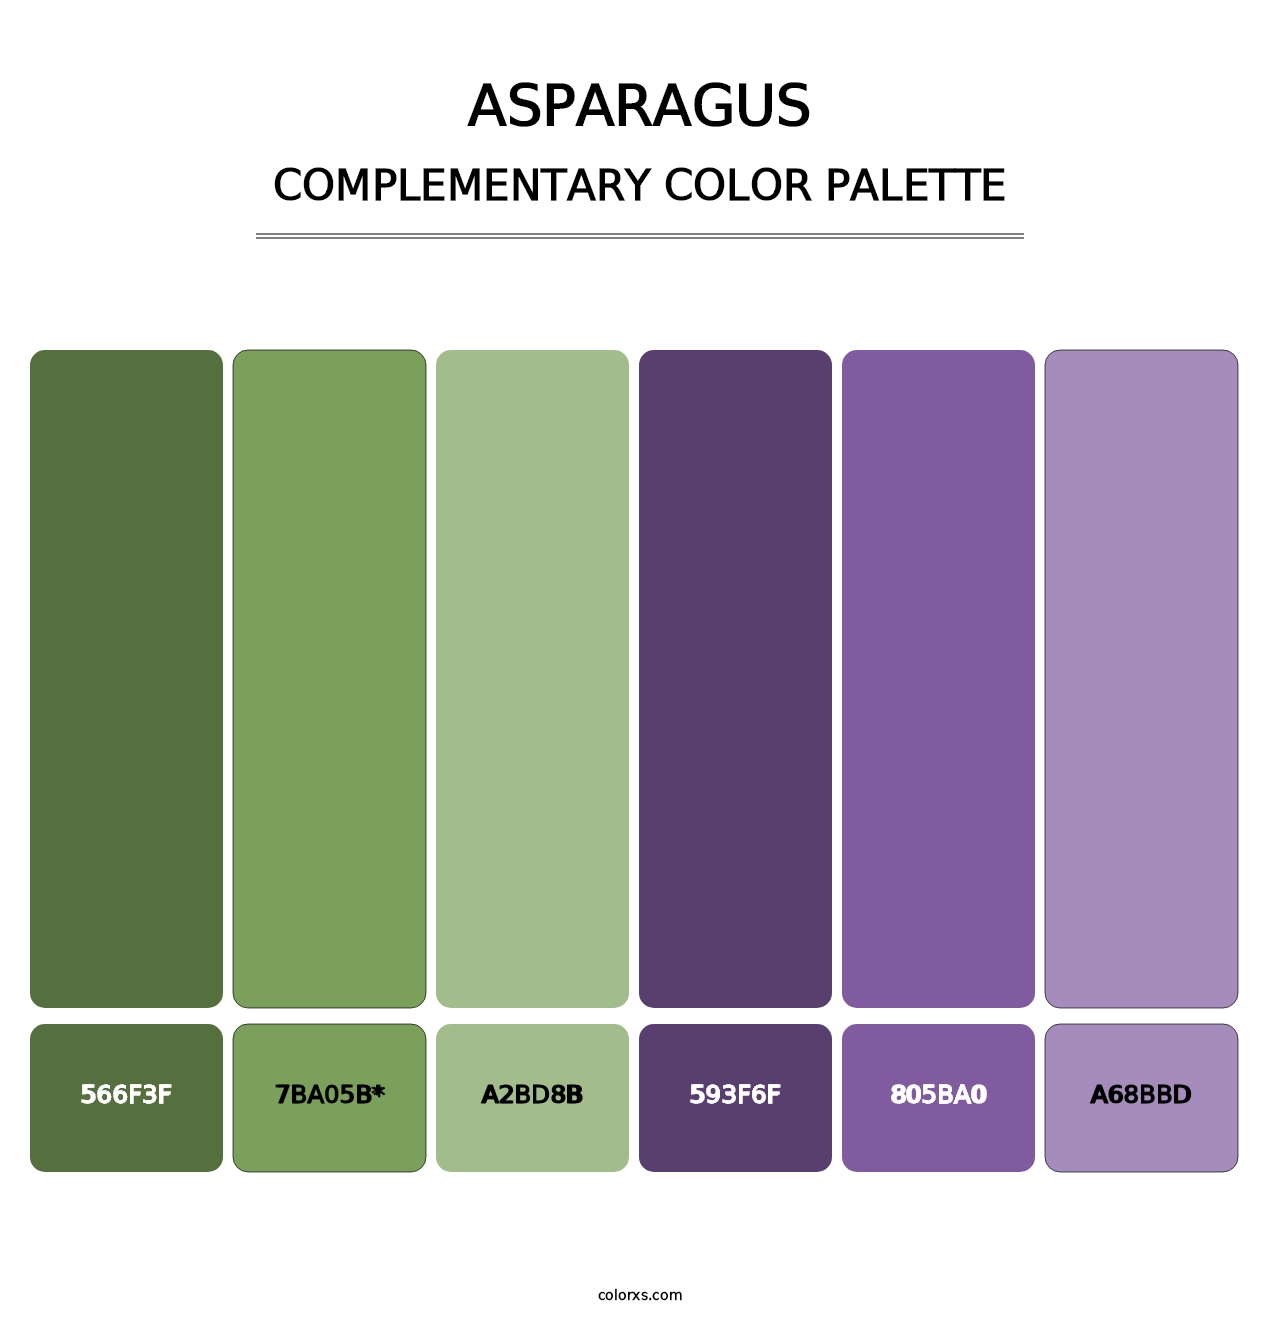 Asparagus - Complementary Color Palette